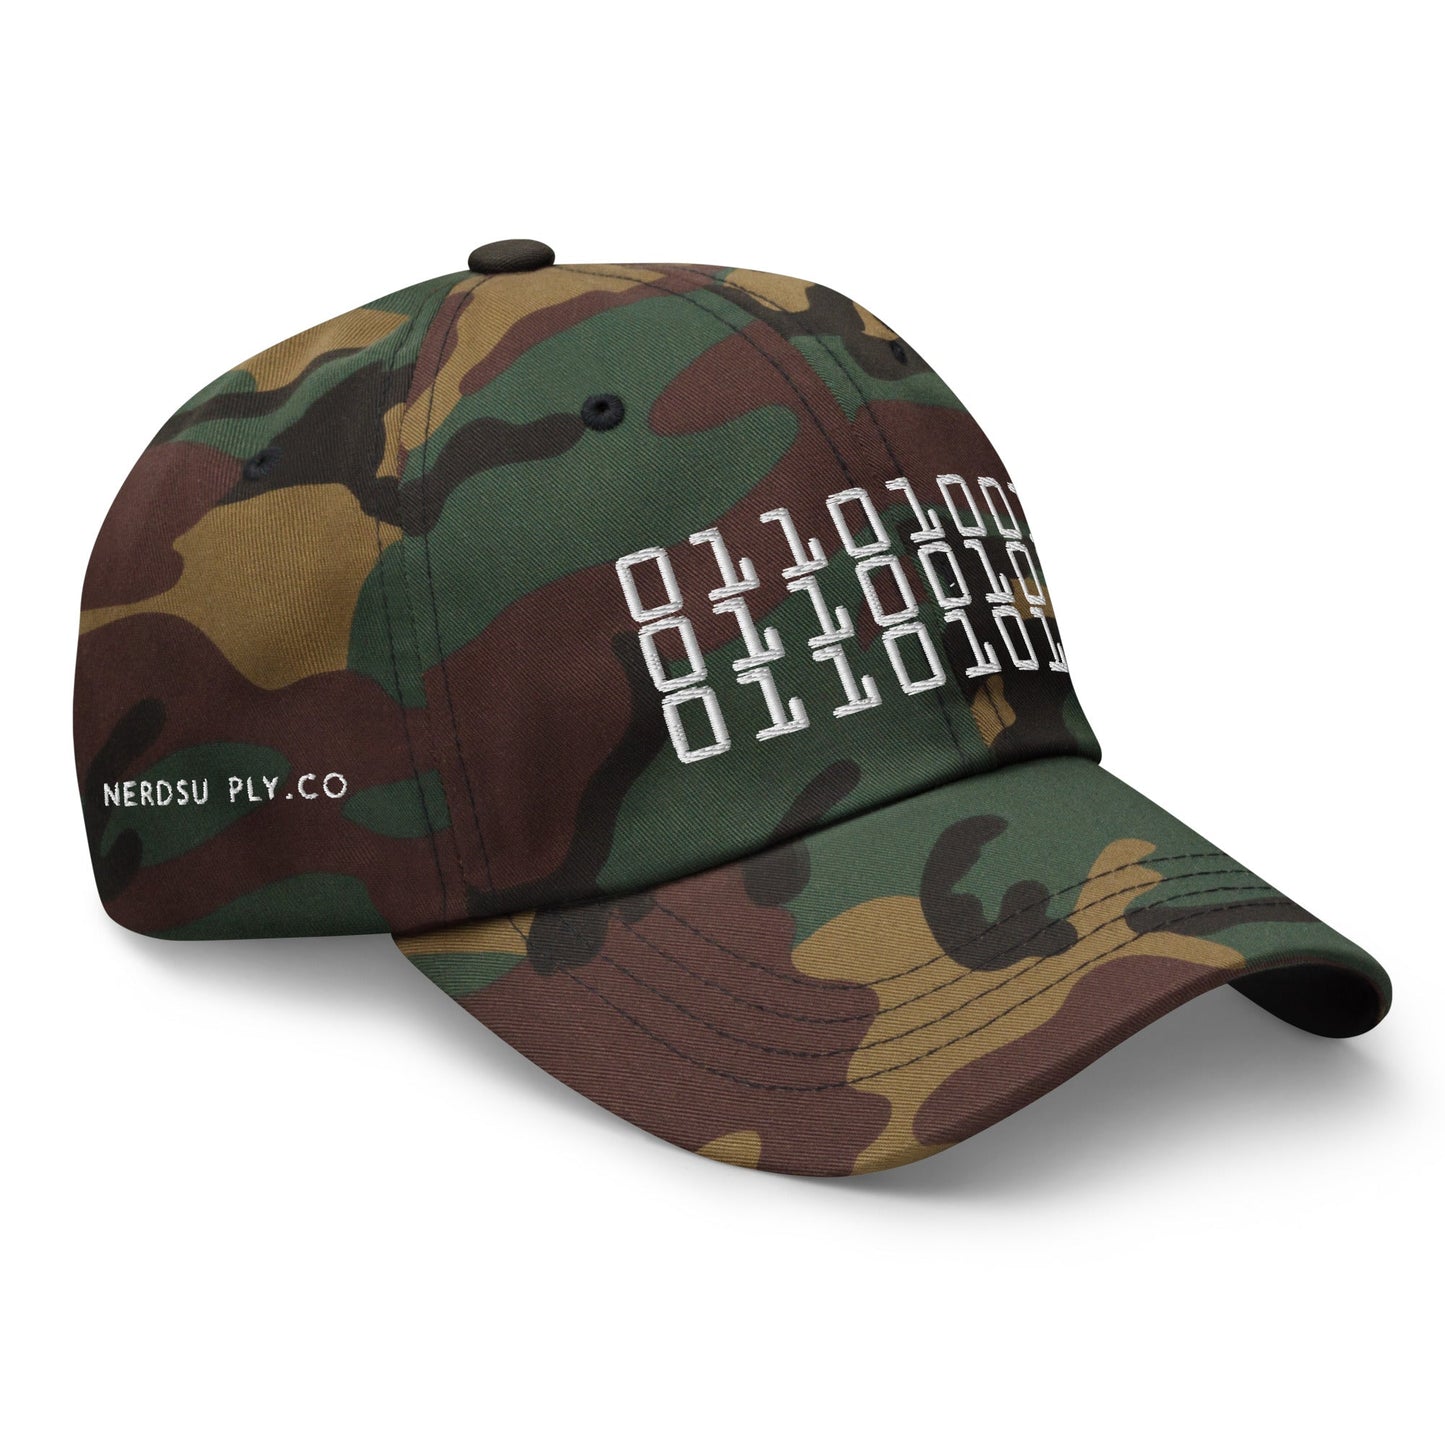 "IDK" in /binary Hat - The Nerd Supply Company